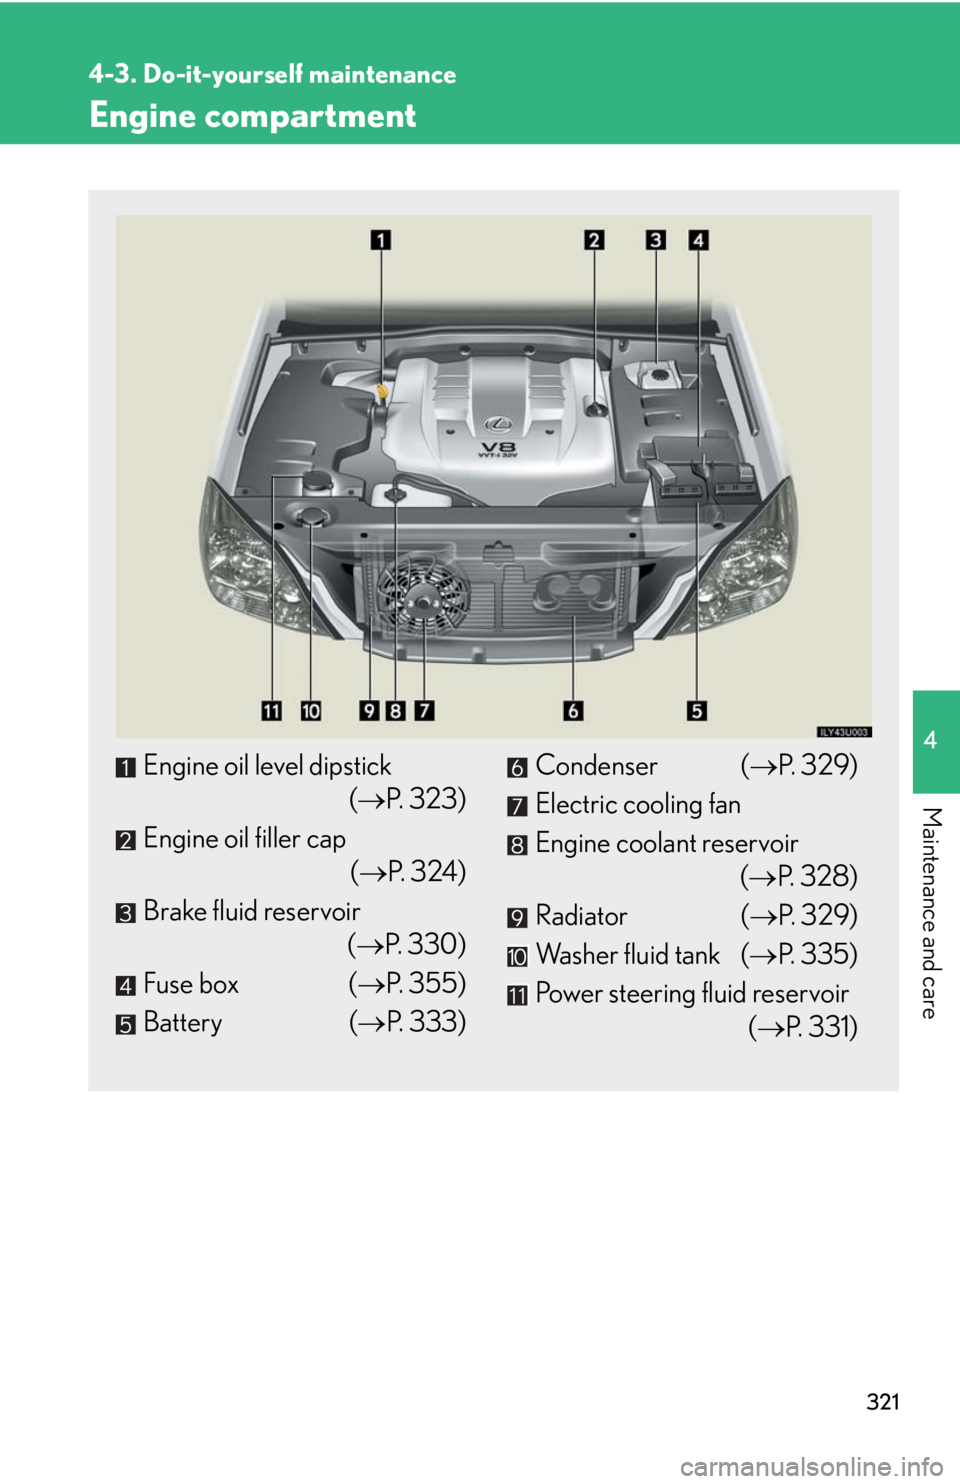 Lexus GX470 2008  Scheduled Maintenace Guide / LEXUS 2008 GX470 OWNERS MANUAL (OM60D82U) 321
4-3. Do-it-yourself maintenance
4
Maintenance and care
Engine compartment
Engine oil level dipstick(P. 323)
Engine oil filler cap (P. 324)
Brake fluid reservoir (P. 330)
Fuse box ( P. 